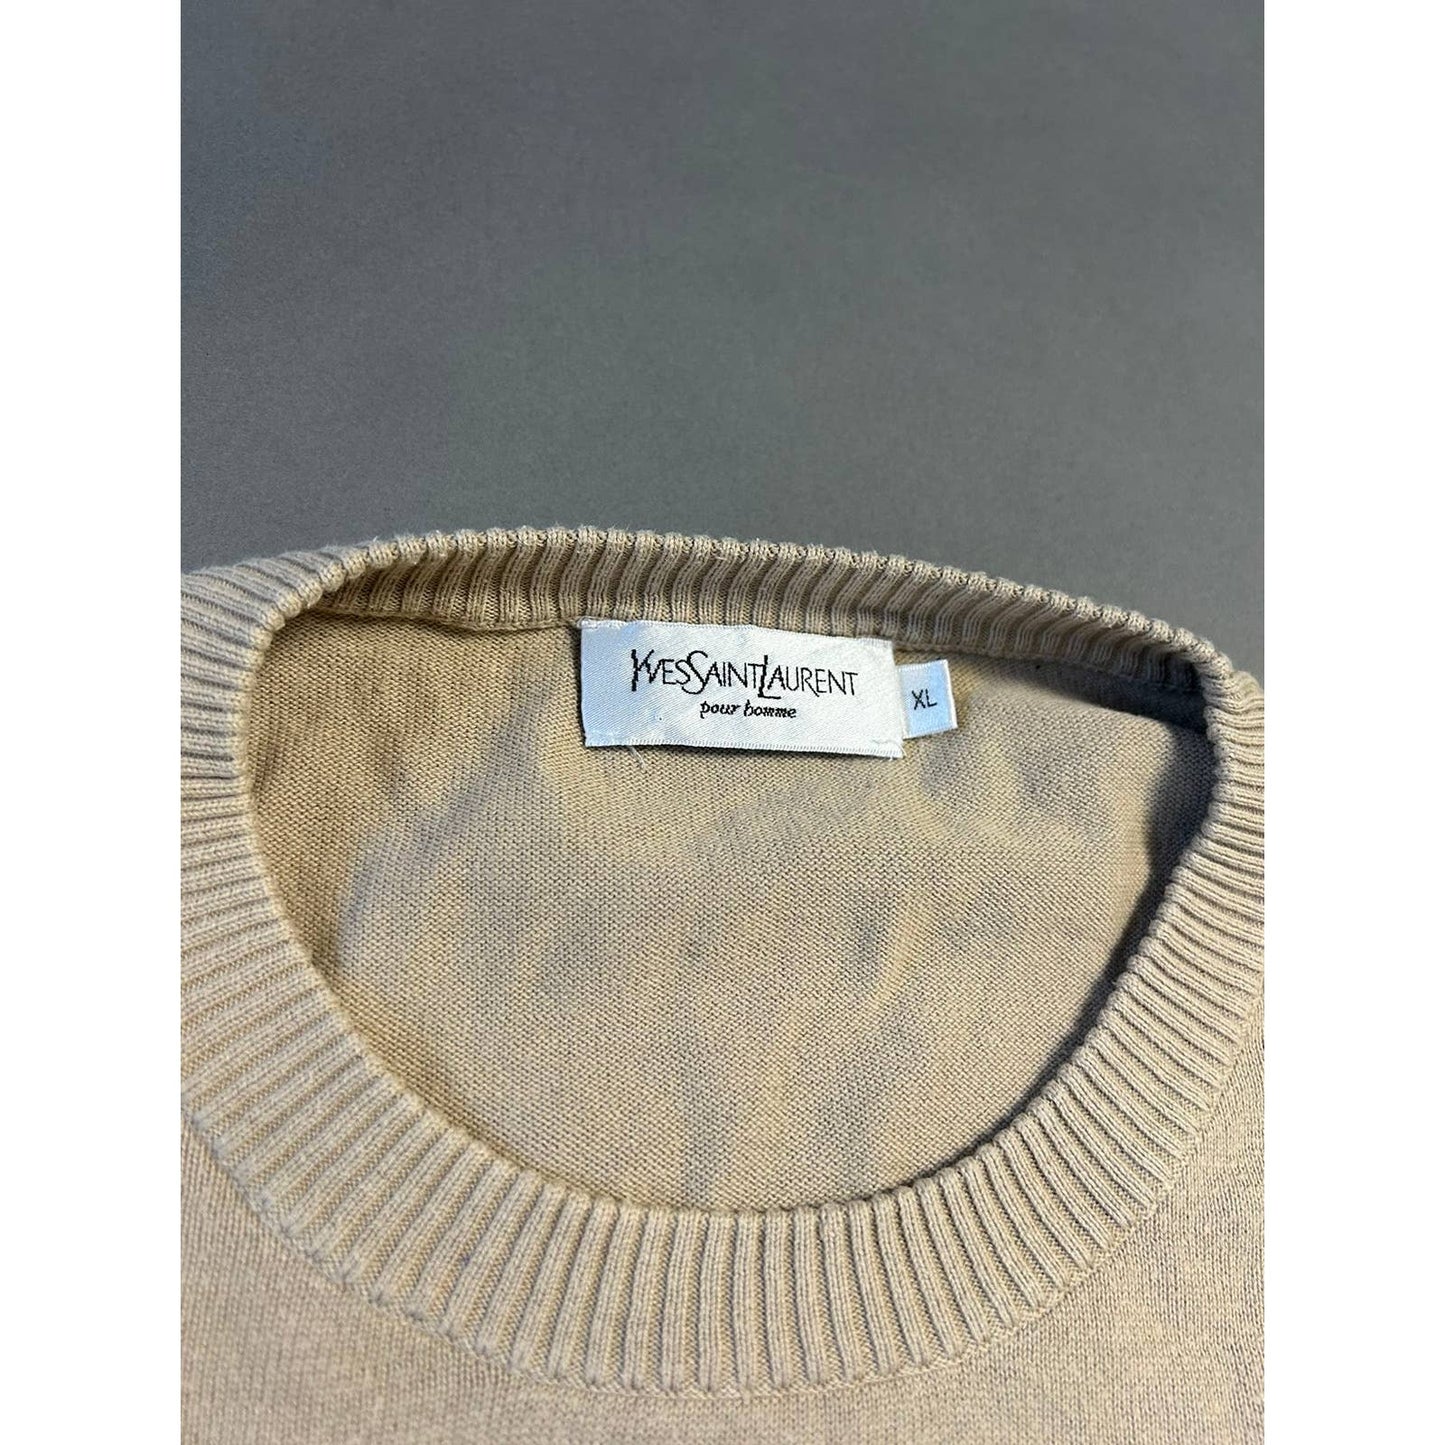 Yves Saint Laurent sweater beige vintage small logo YSL 90s